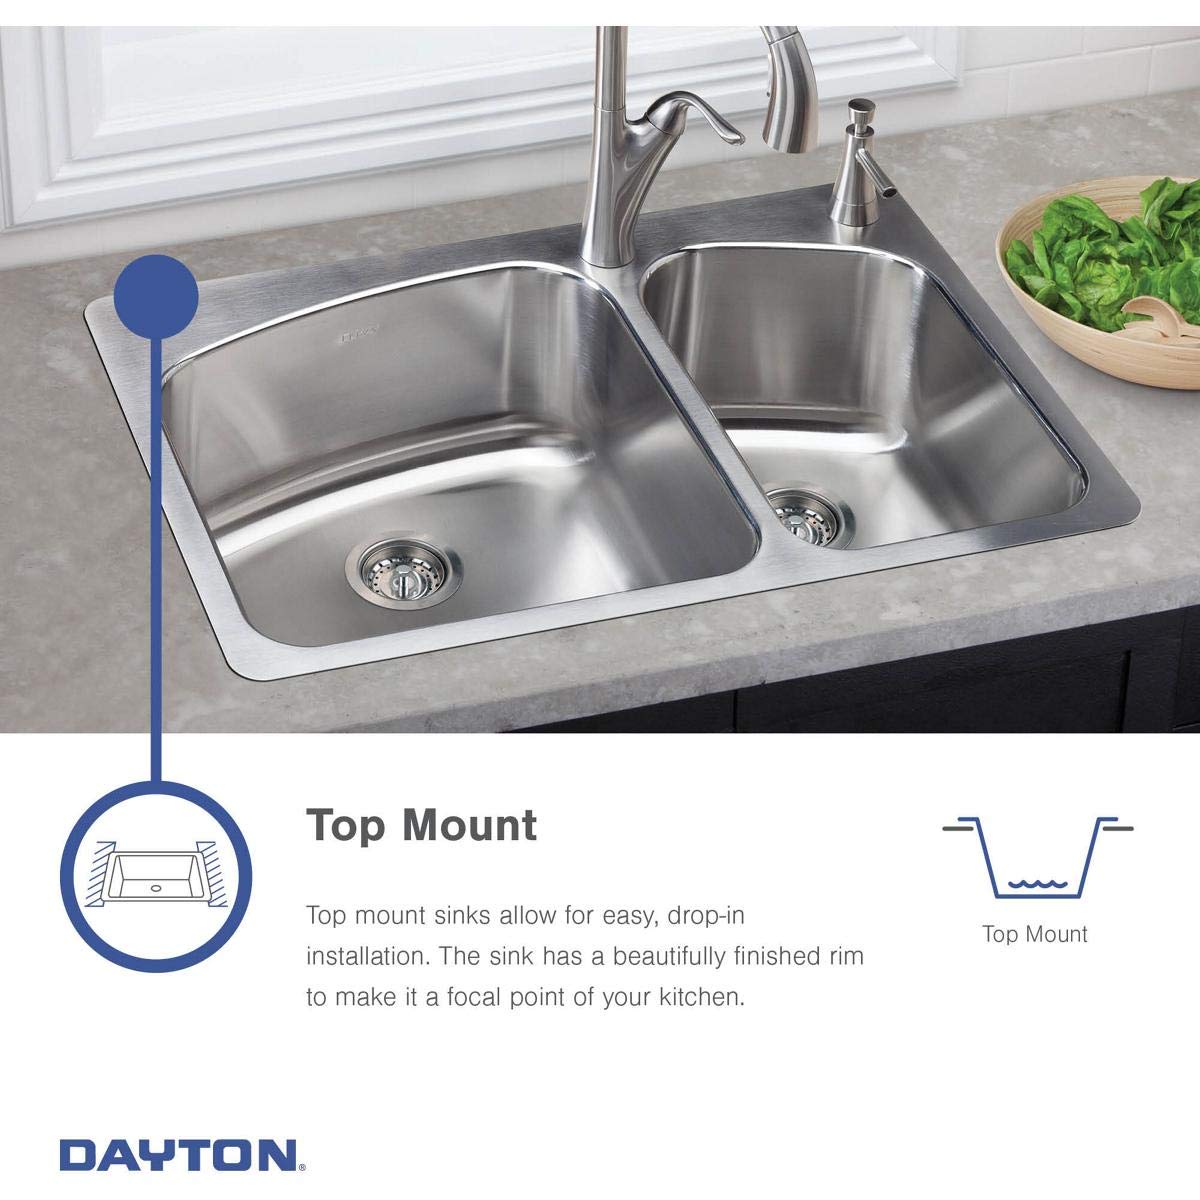 Elkay Dayton DSE233223 Equal Double Bowl Top Mount Stainless Steel Sink, 33 x 22